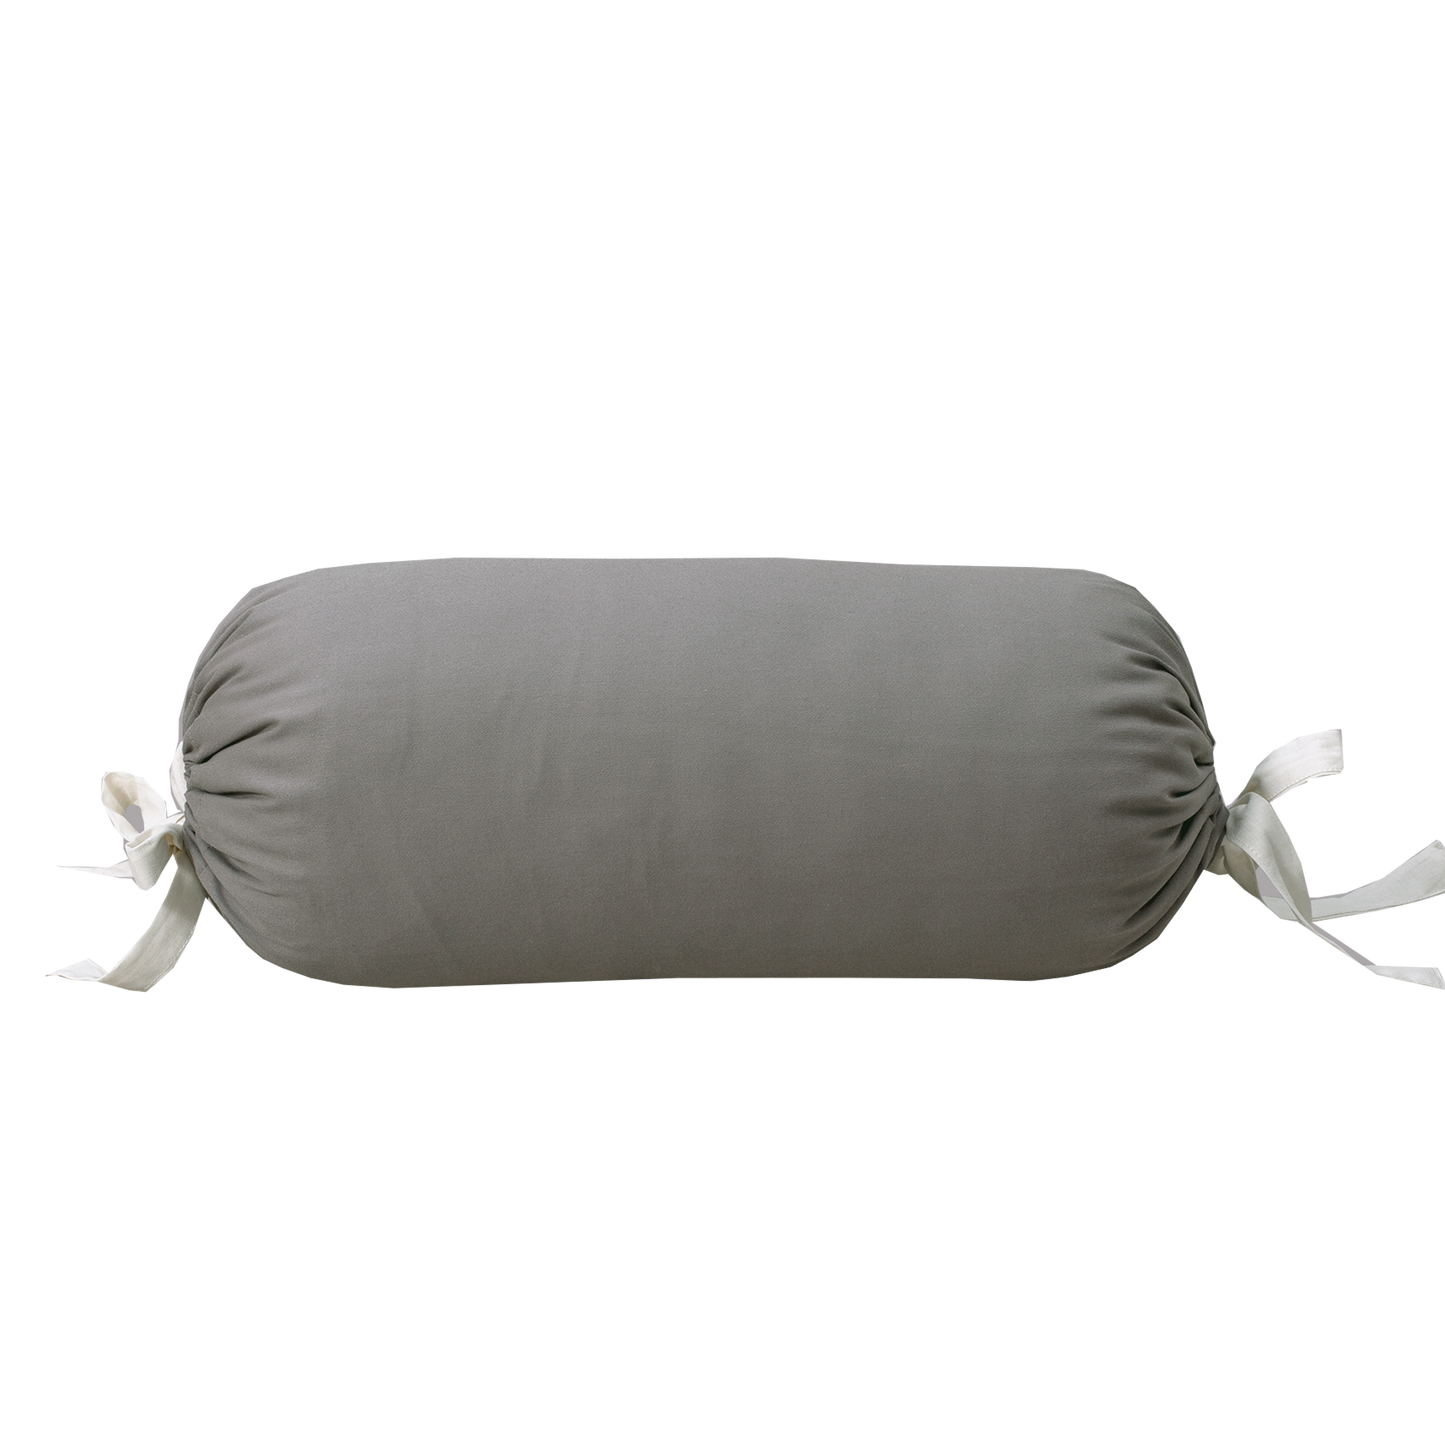 Gray cylinder yoga cushion - Yoga Bolster